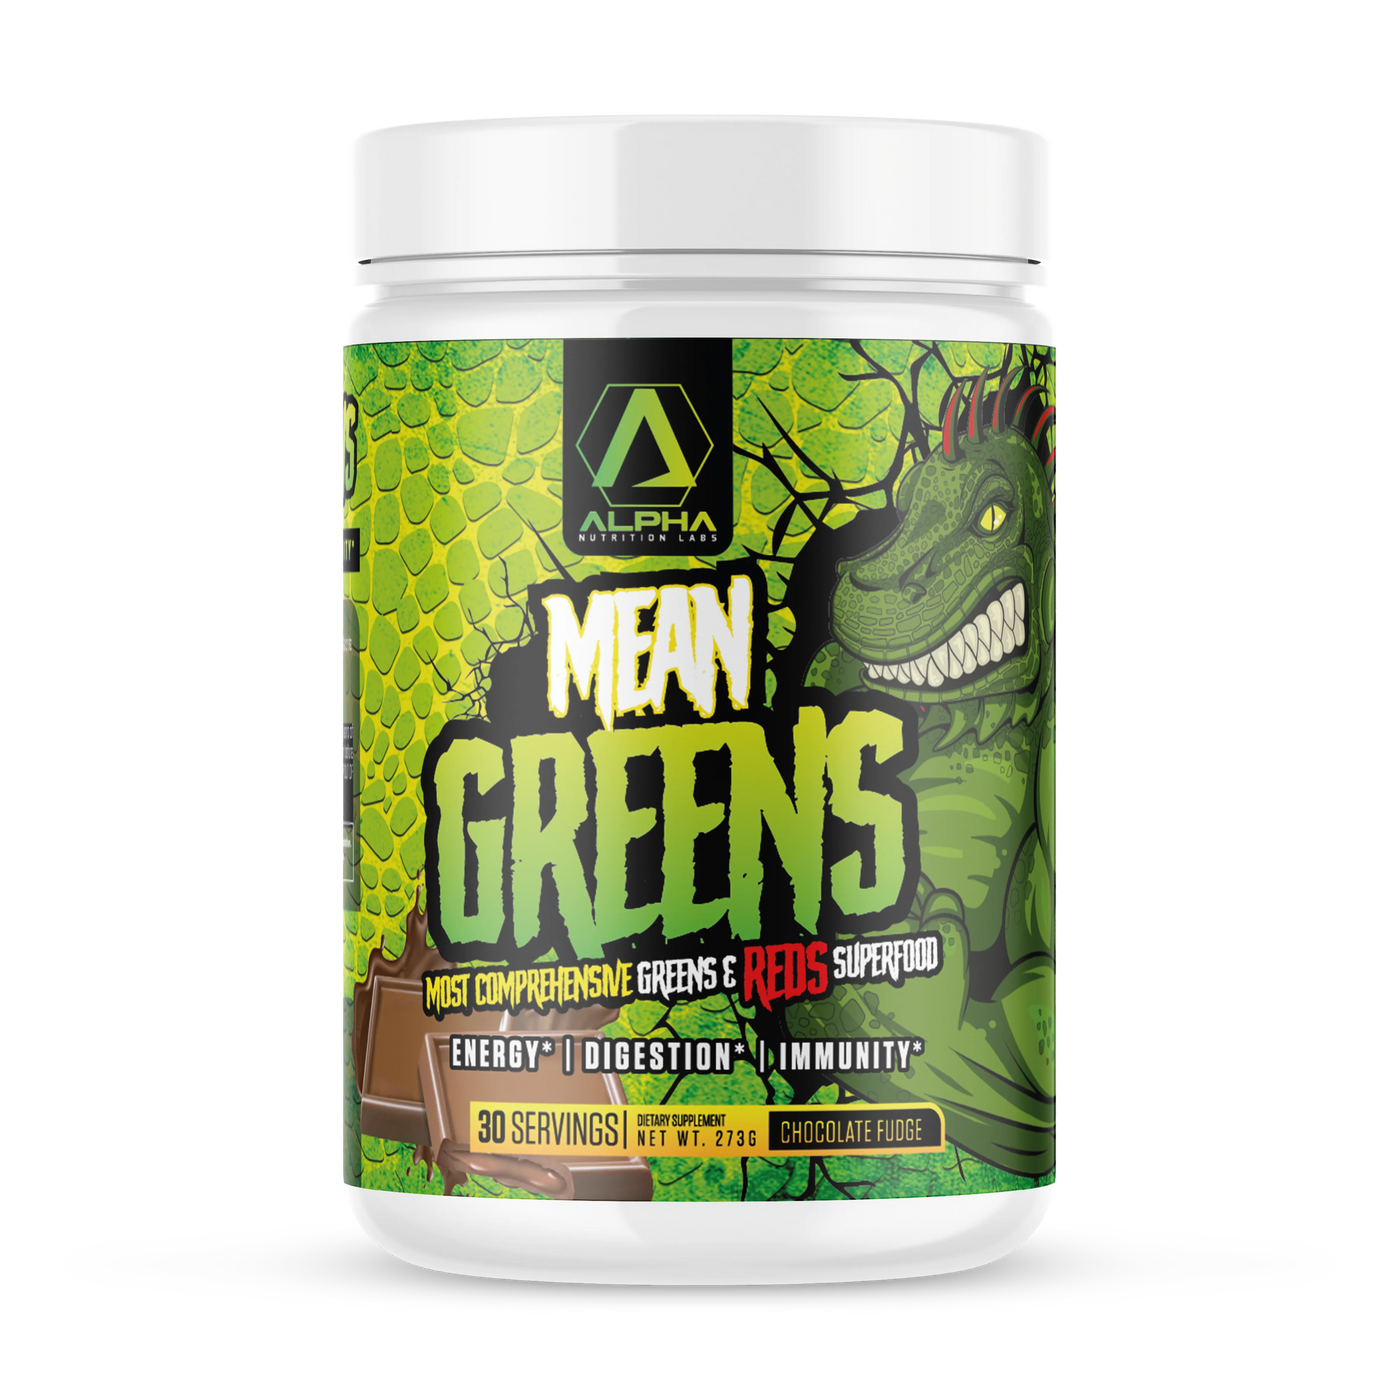 Alpha Nutrition | Mean Greens